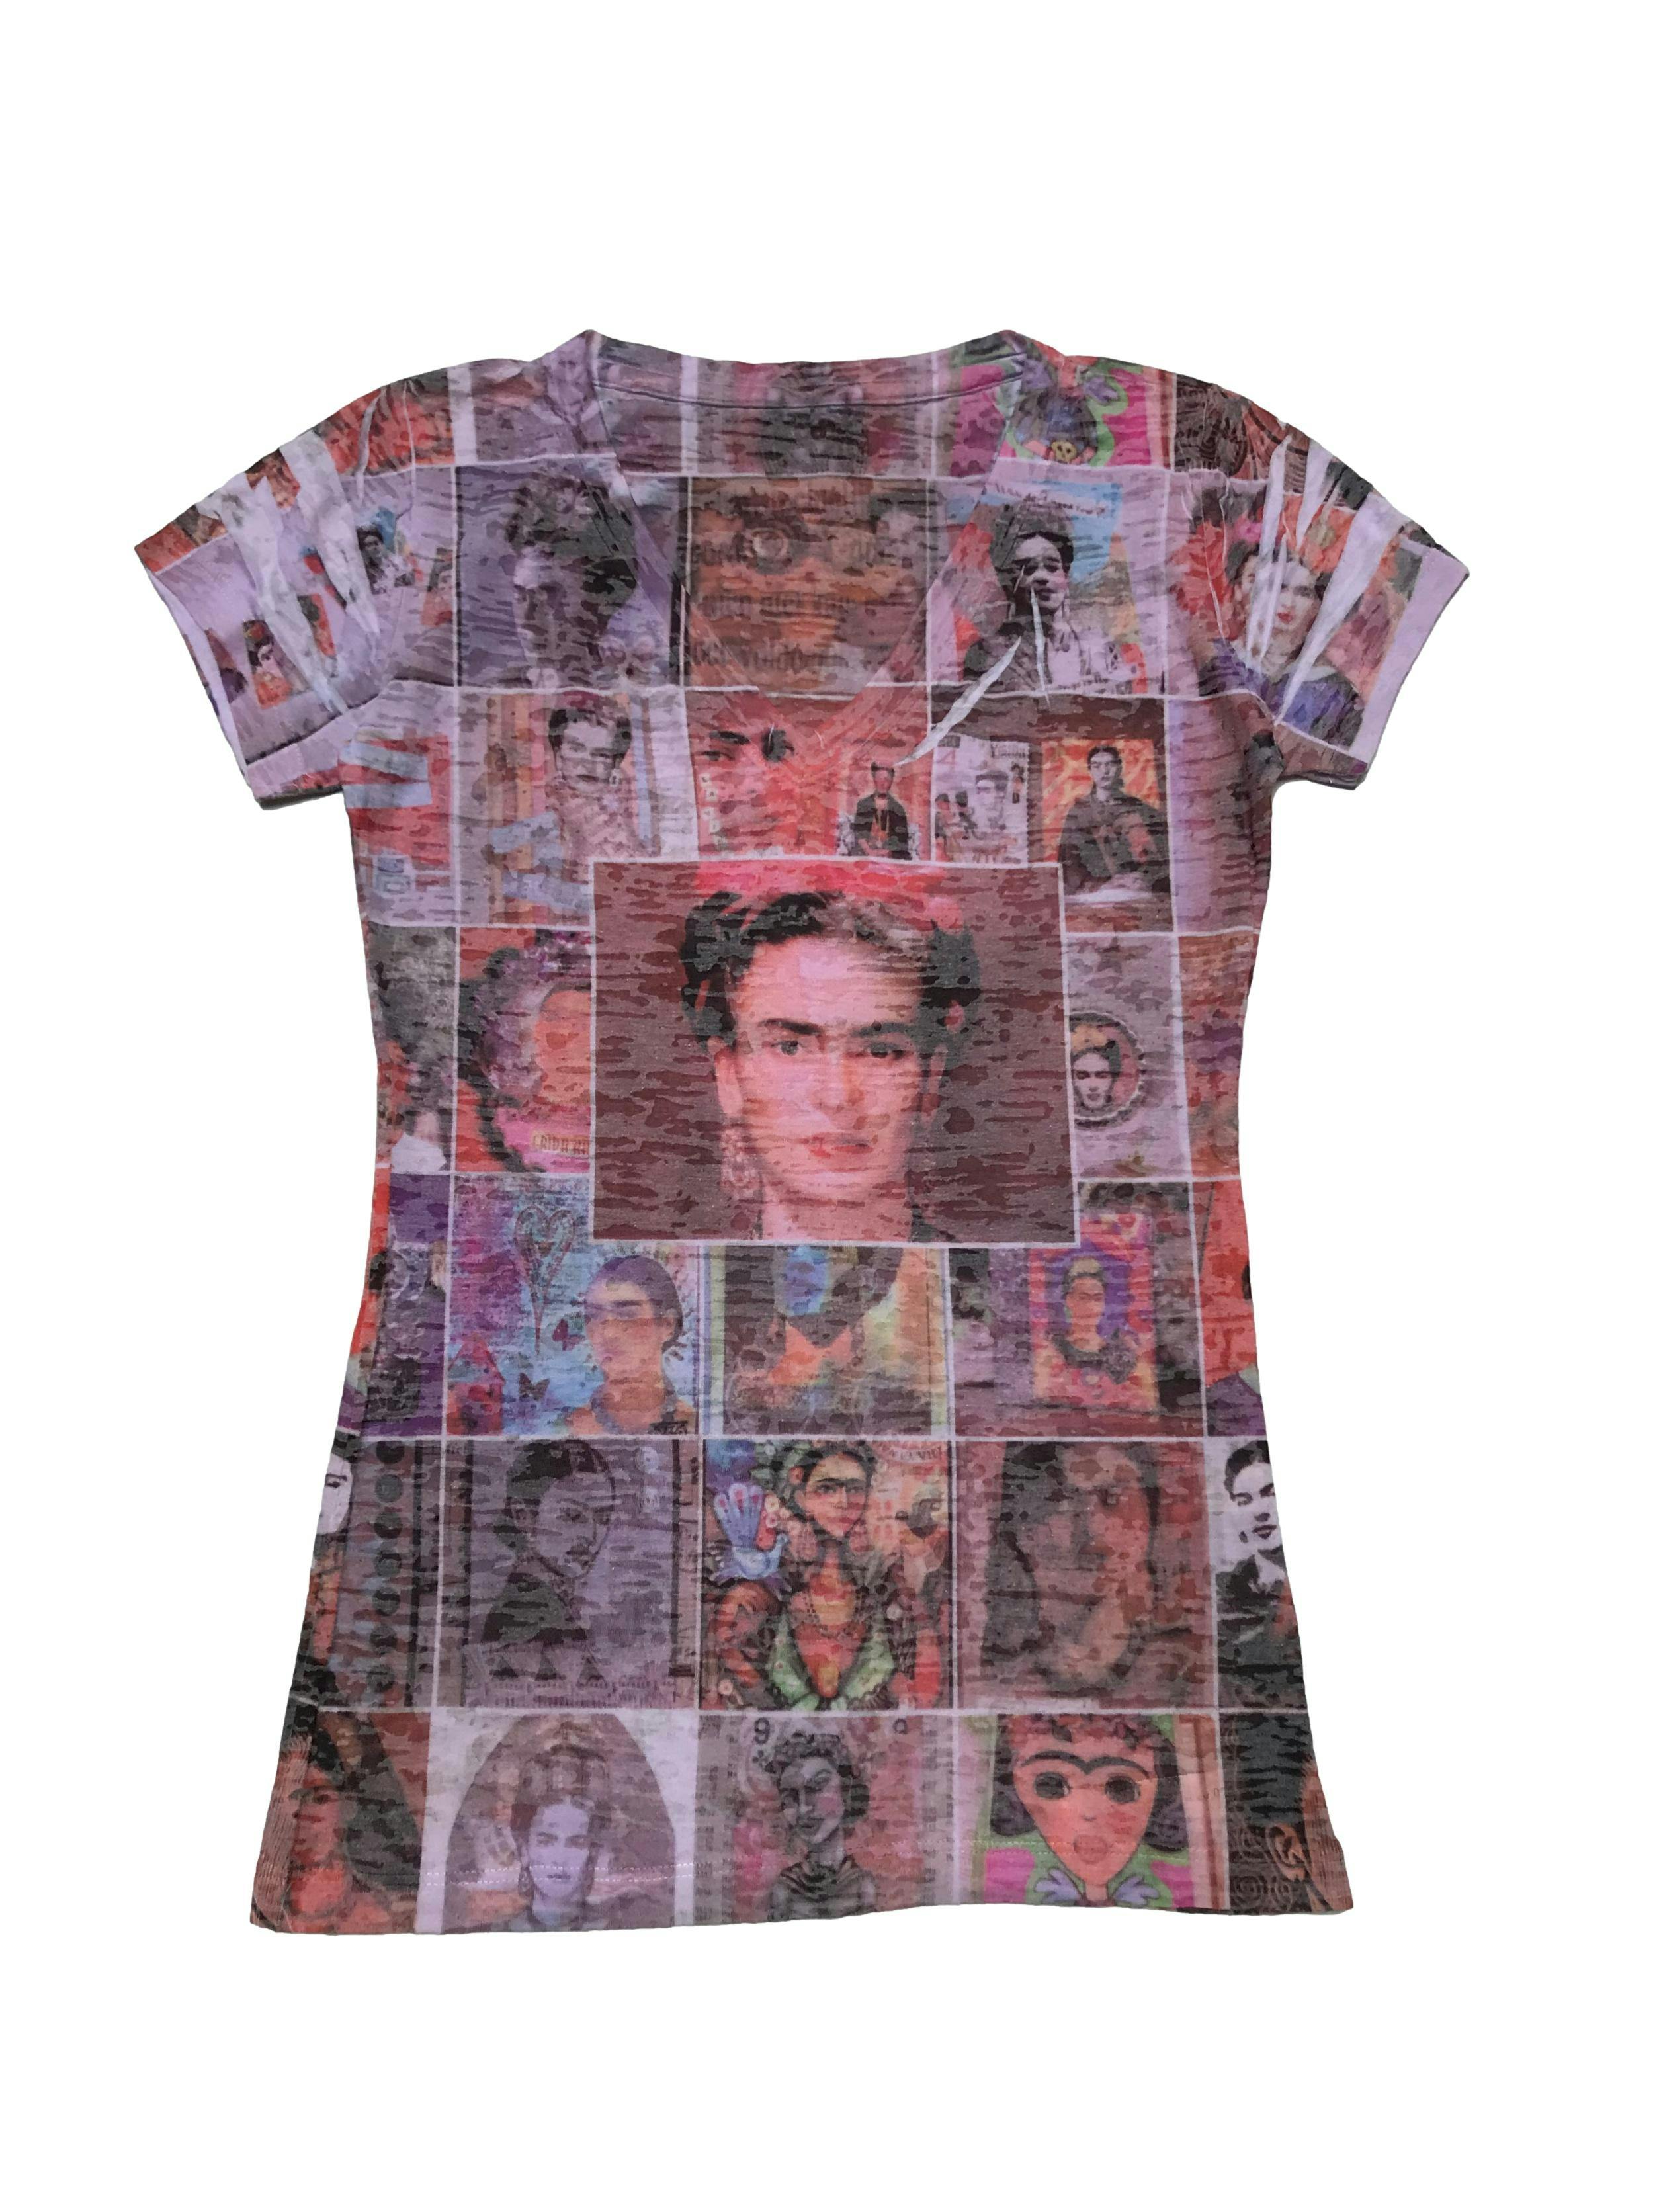 Polo mosaico Frida Kahlo, mezcla de algodón, cuello en V. Busto 85cm sin estirar Largo 60cm.